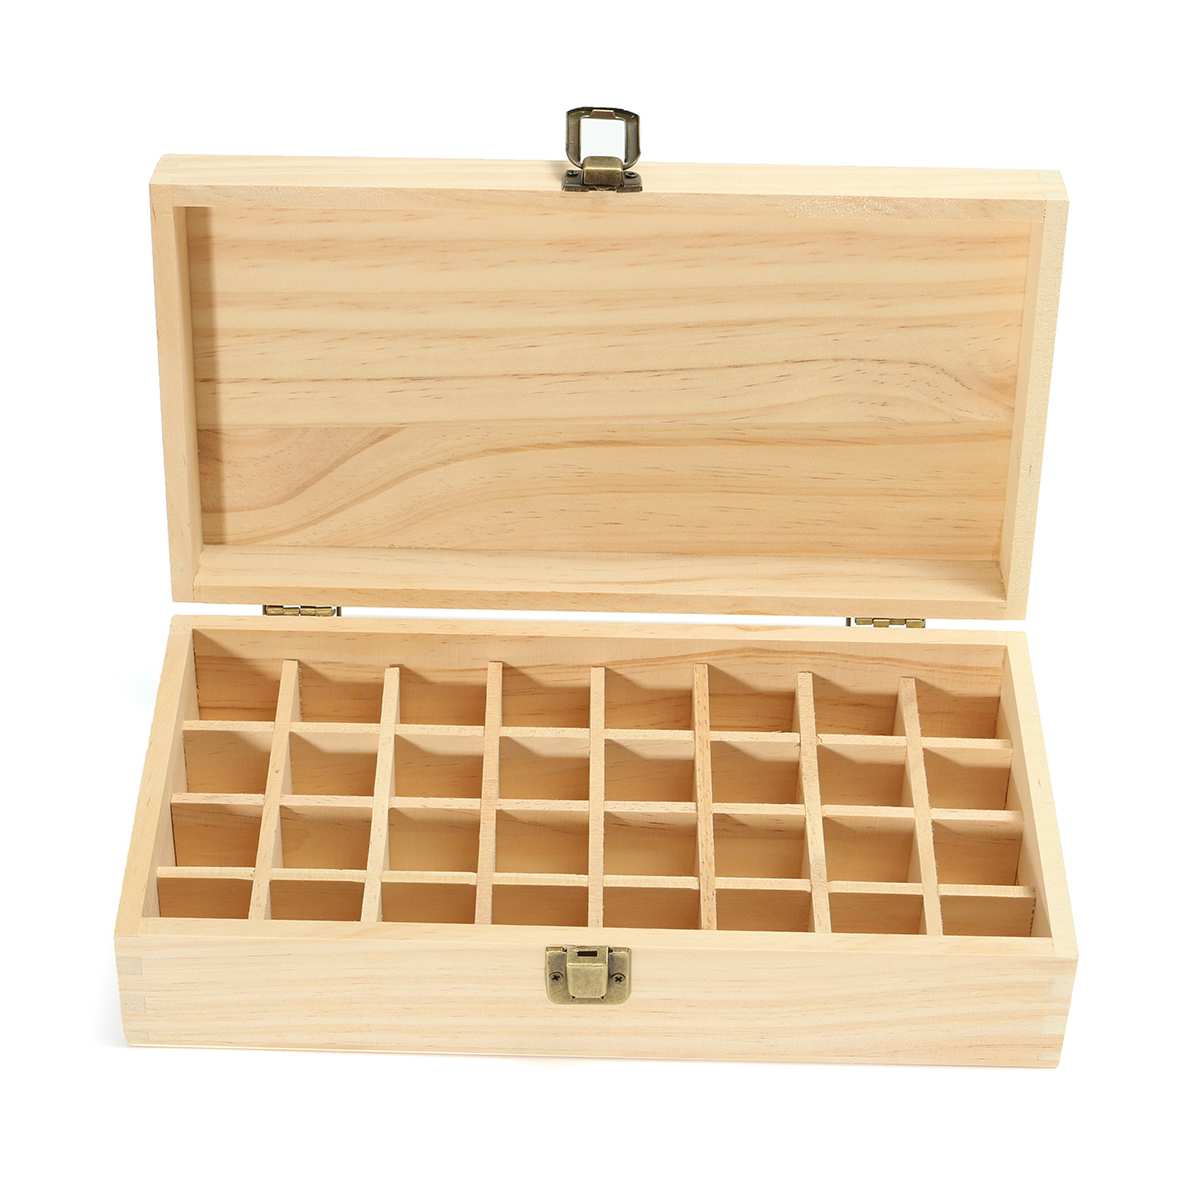 32 Grid Wooden Storage Box Organizer Essential Oil Bottles Jewelry Treasure Case Makeup Cosmetics Organizer For Home